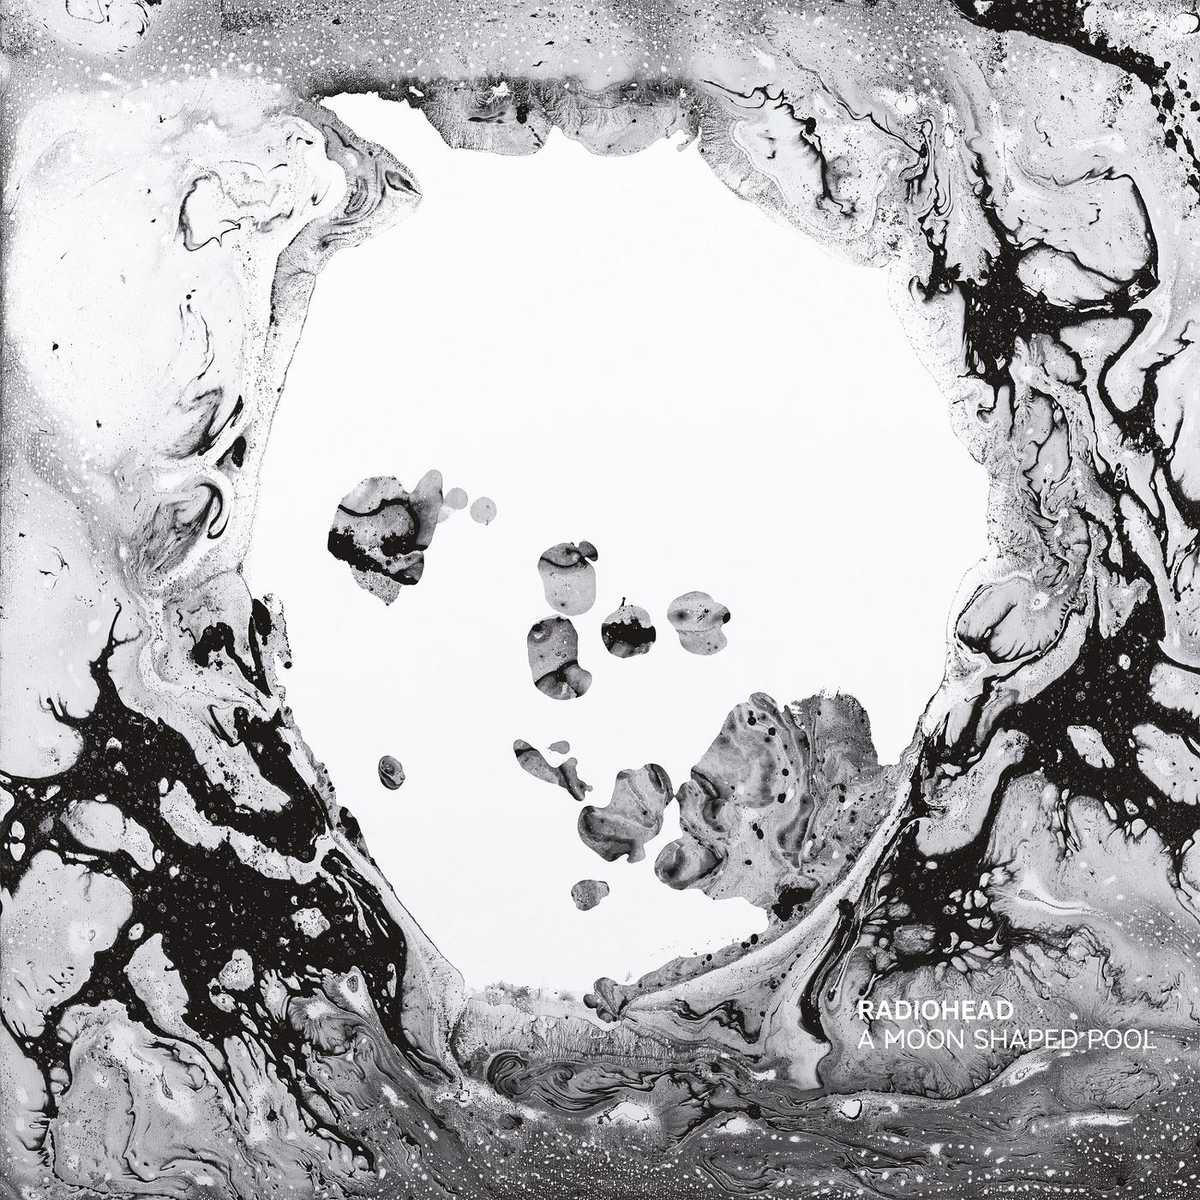 Radiohead - A Moon Shaped Pool εξώφυλλο